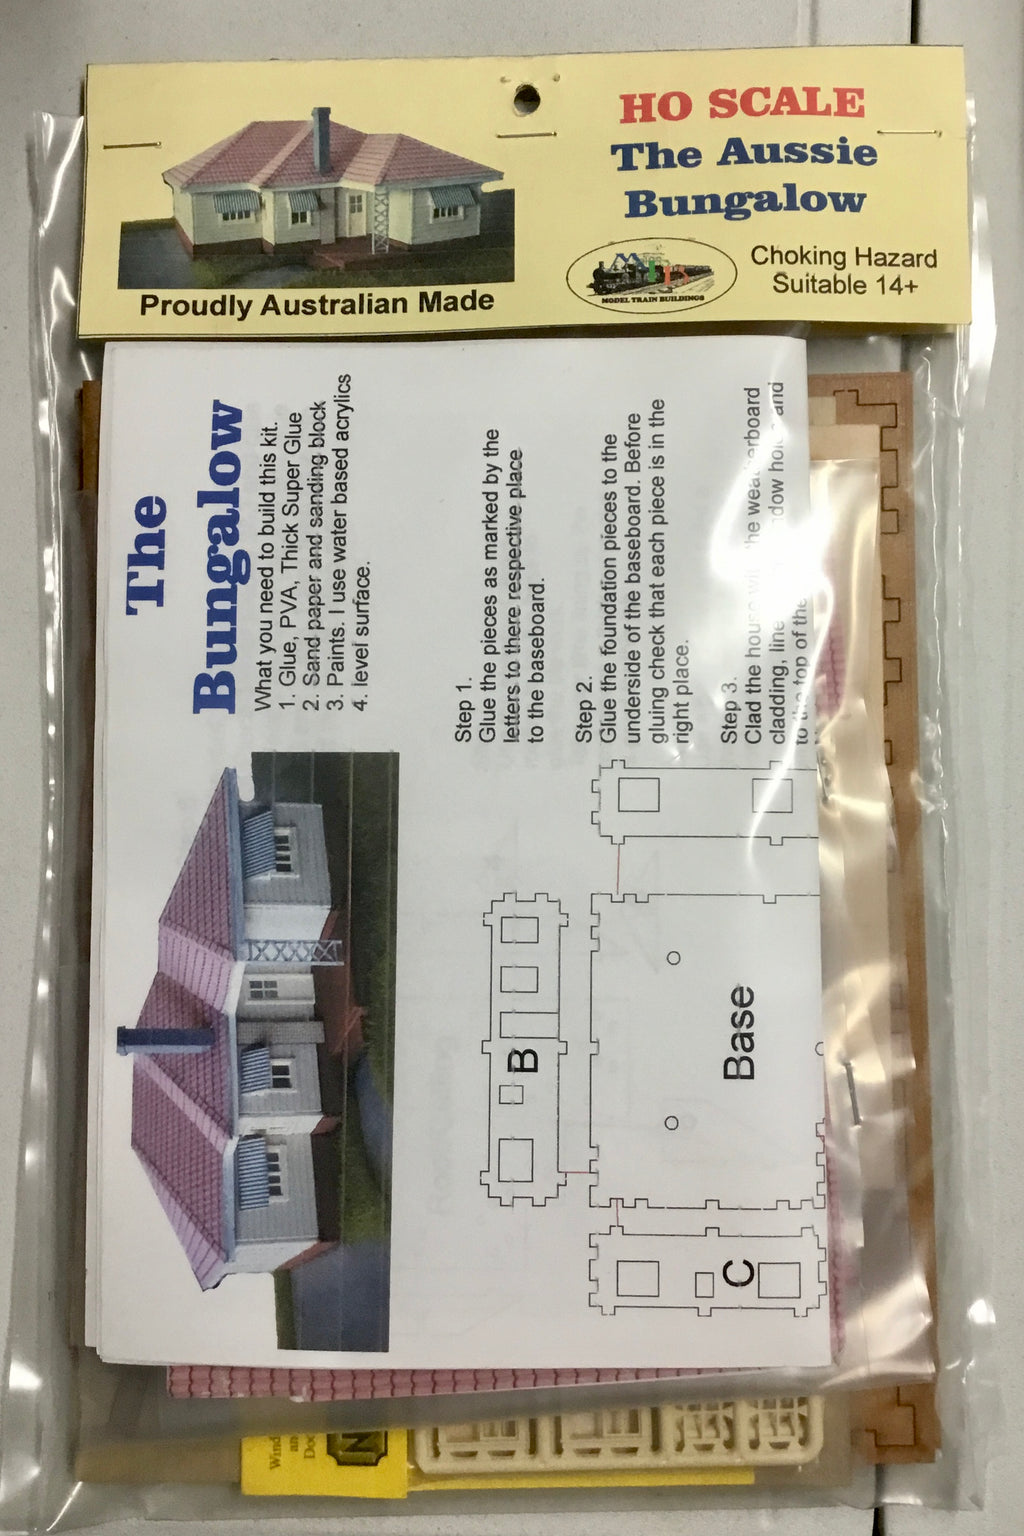 The Aussie Bungalow laser cut house kit Walker Models HO